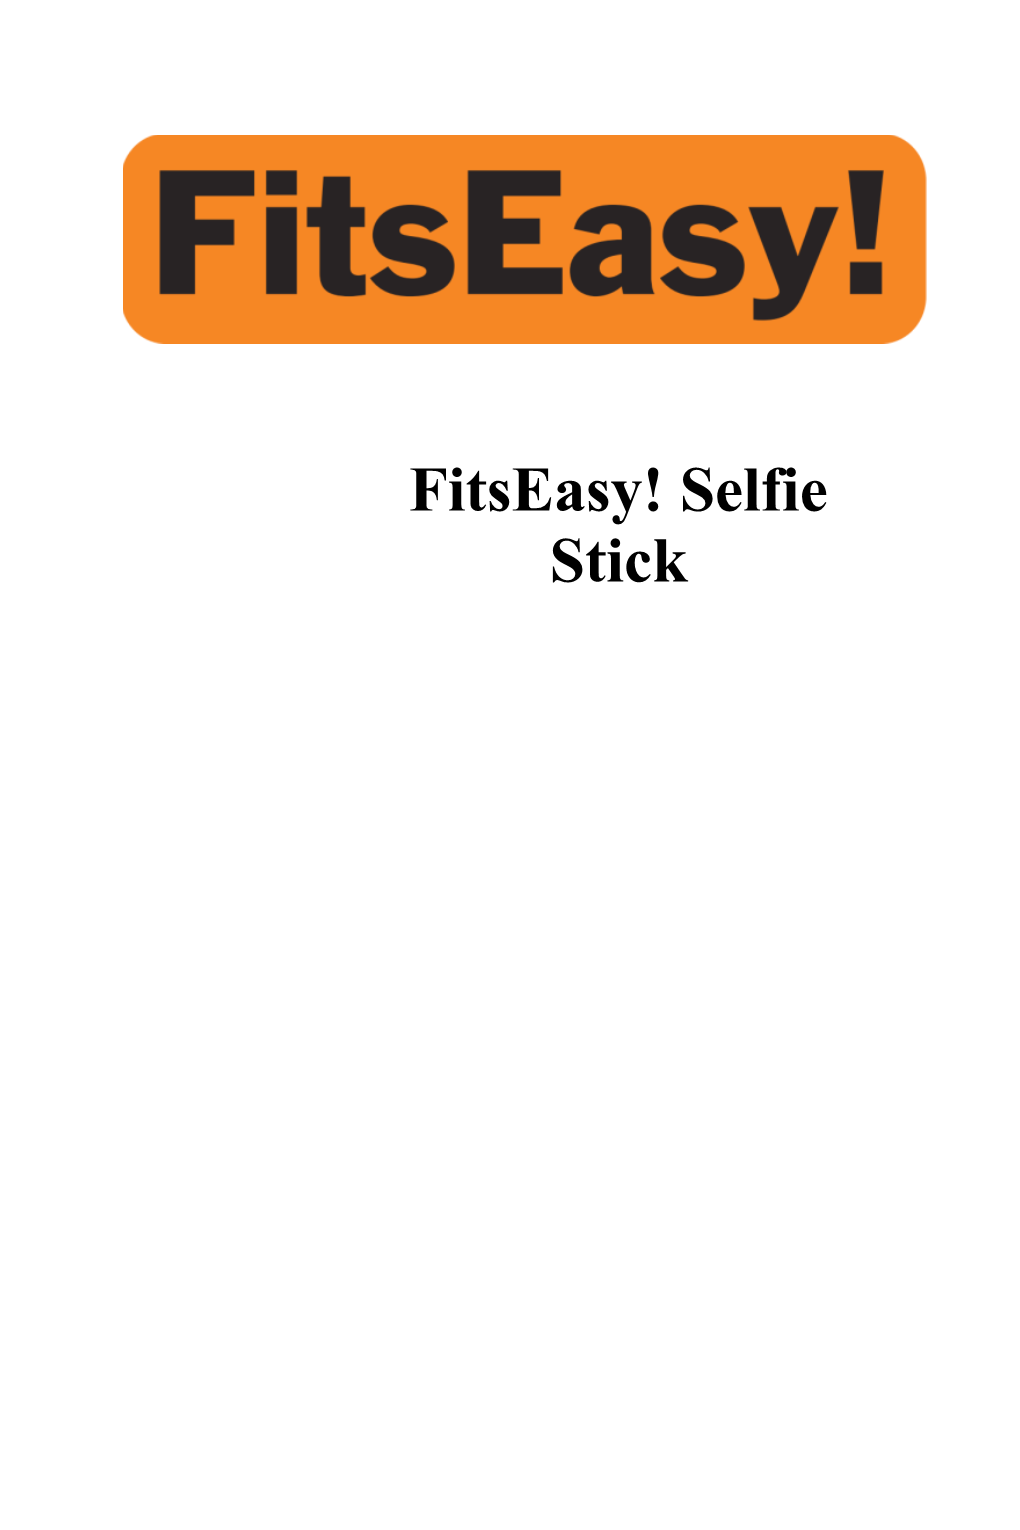 Fitseasy! Selfie Stick